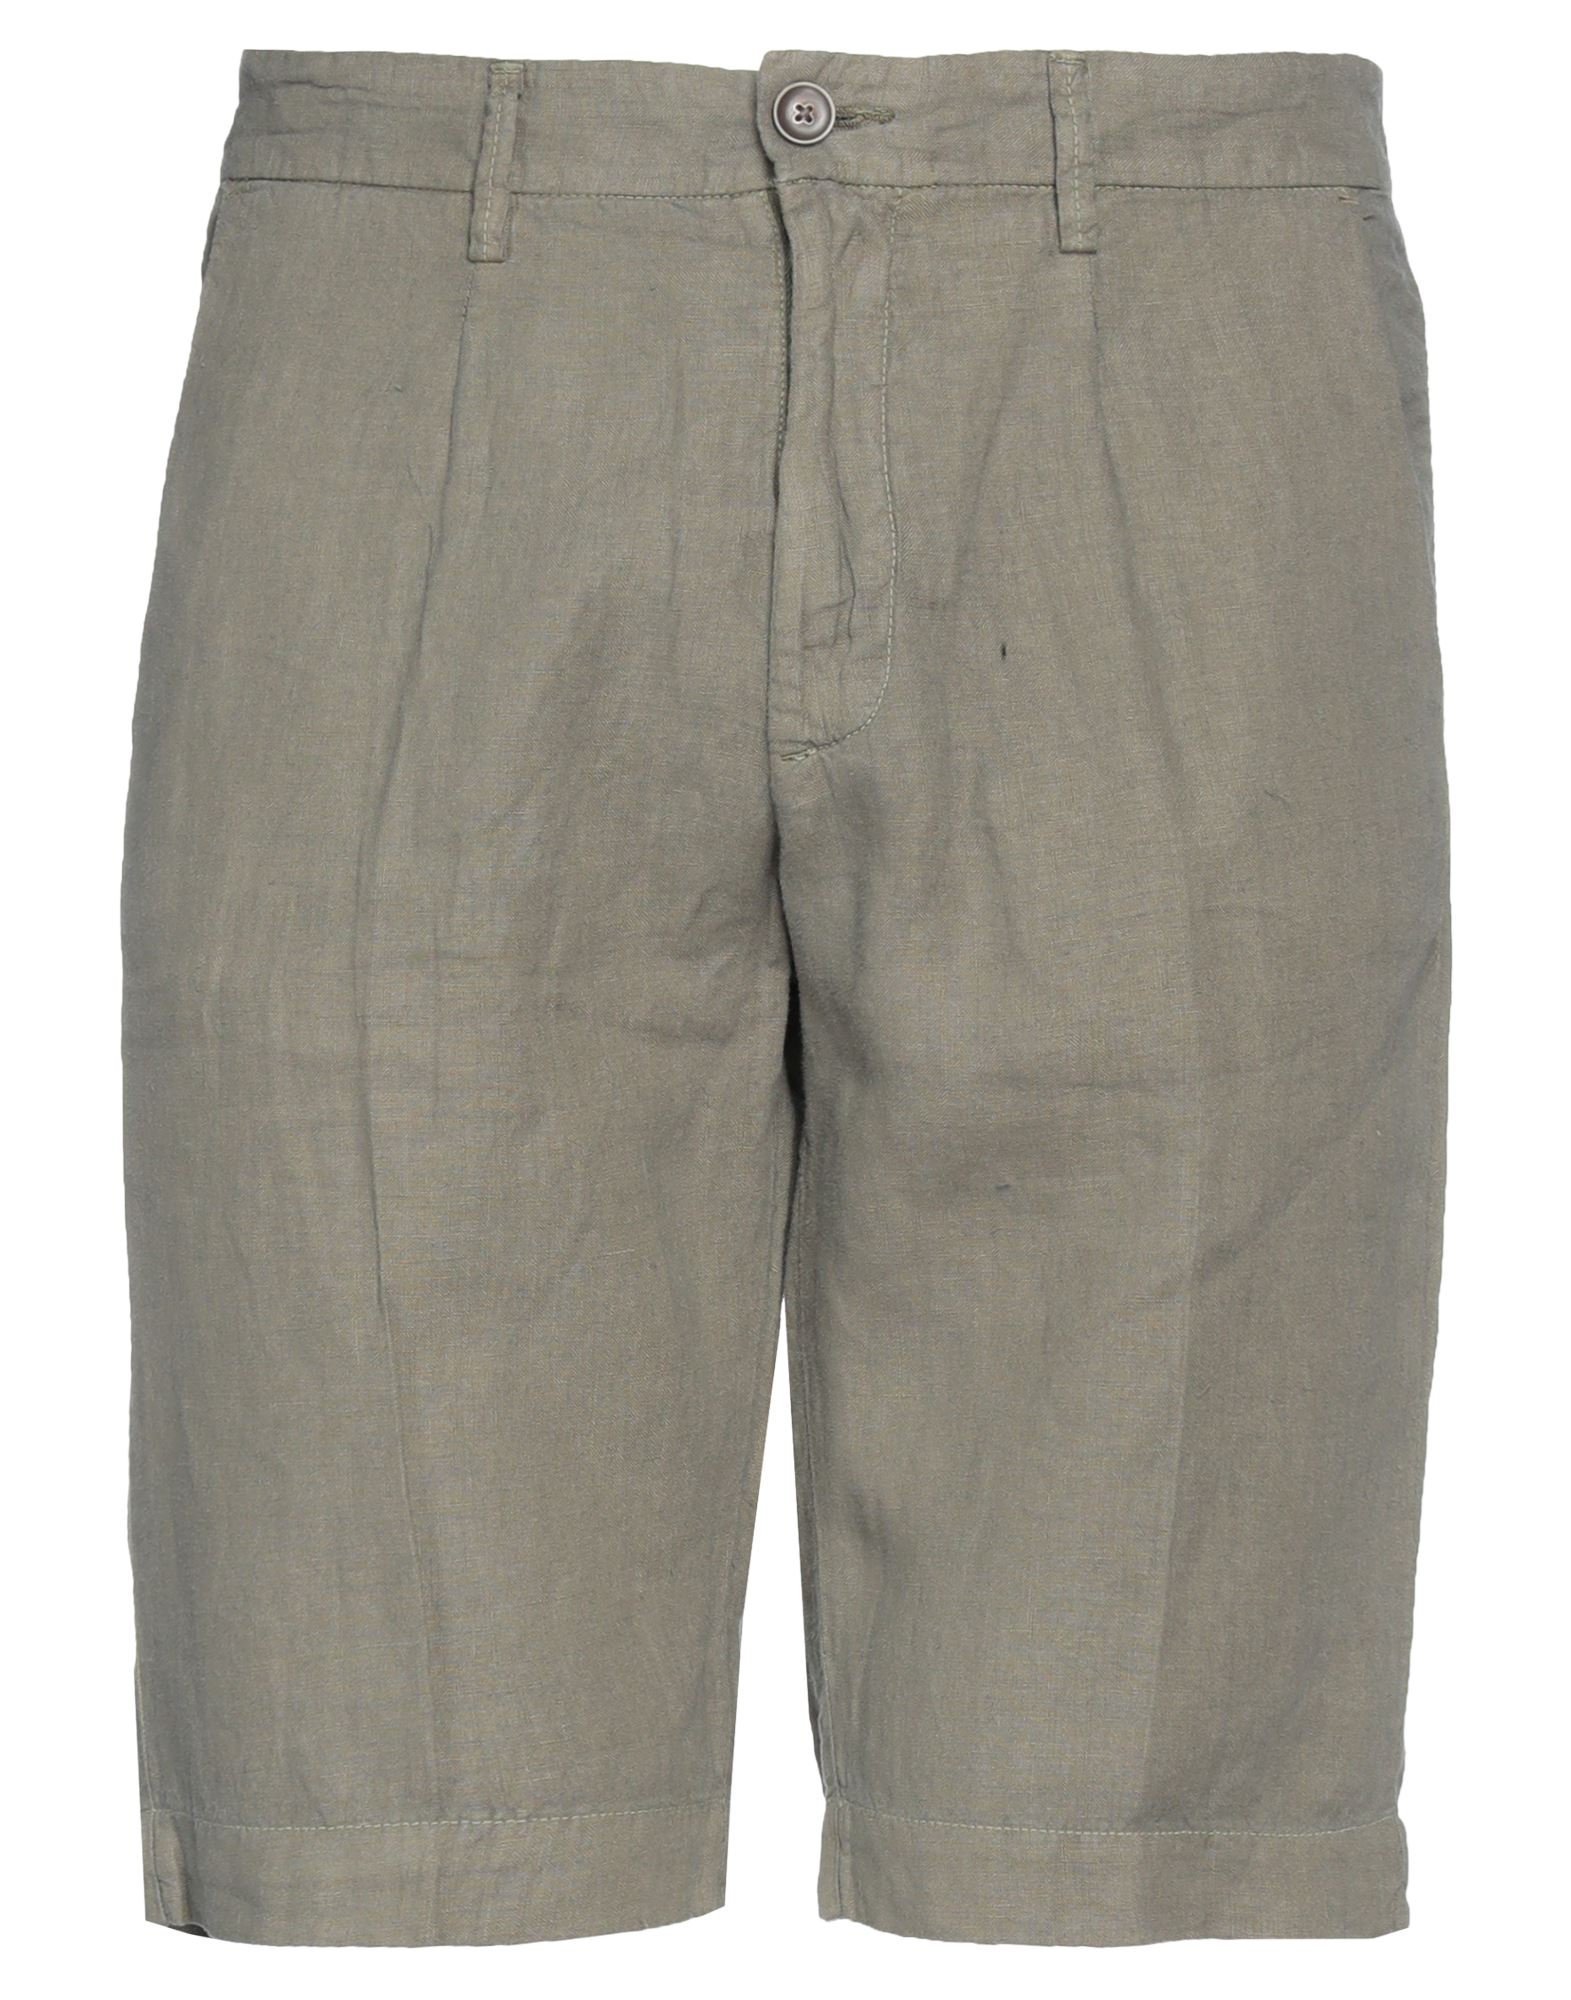 Markup Man Shorts & Bermuda Shorts Military Green Size 28 Linen